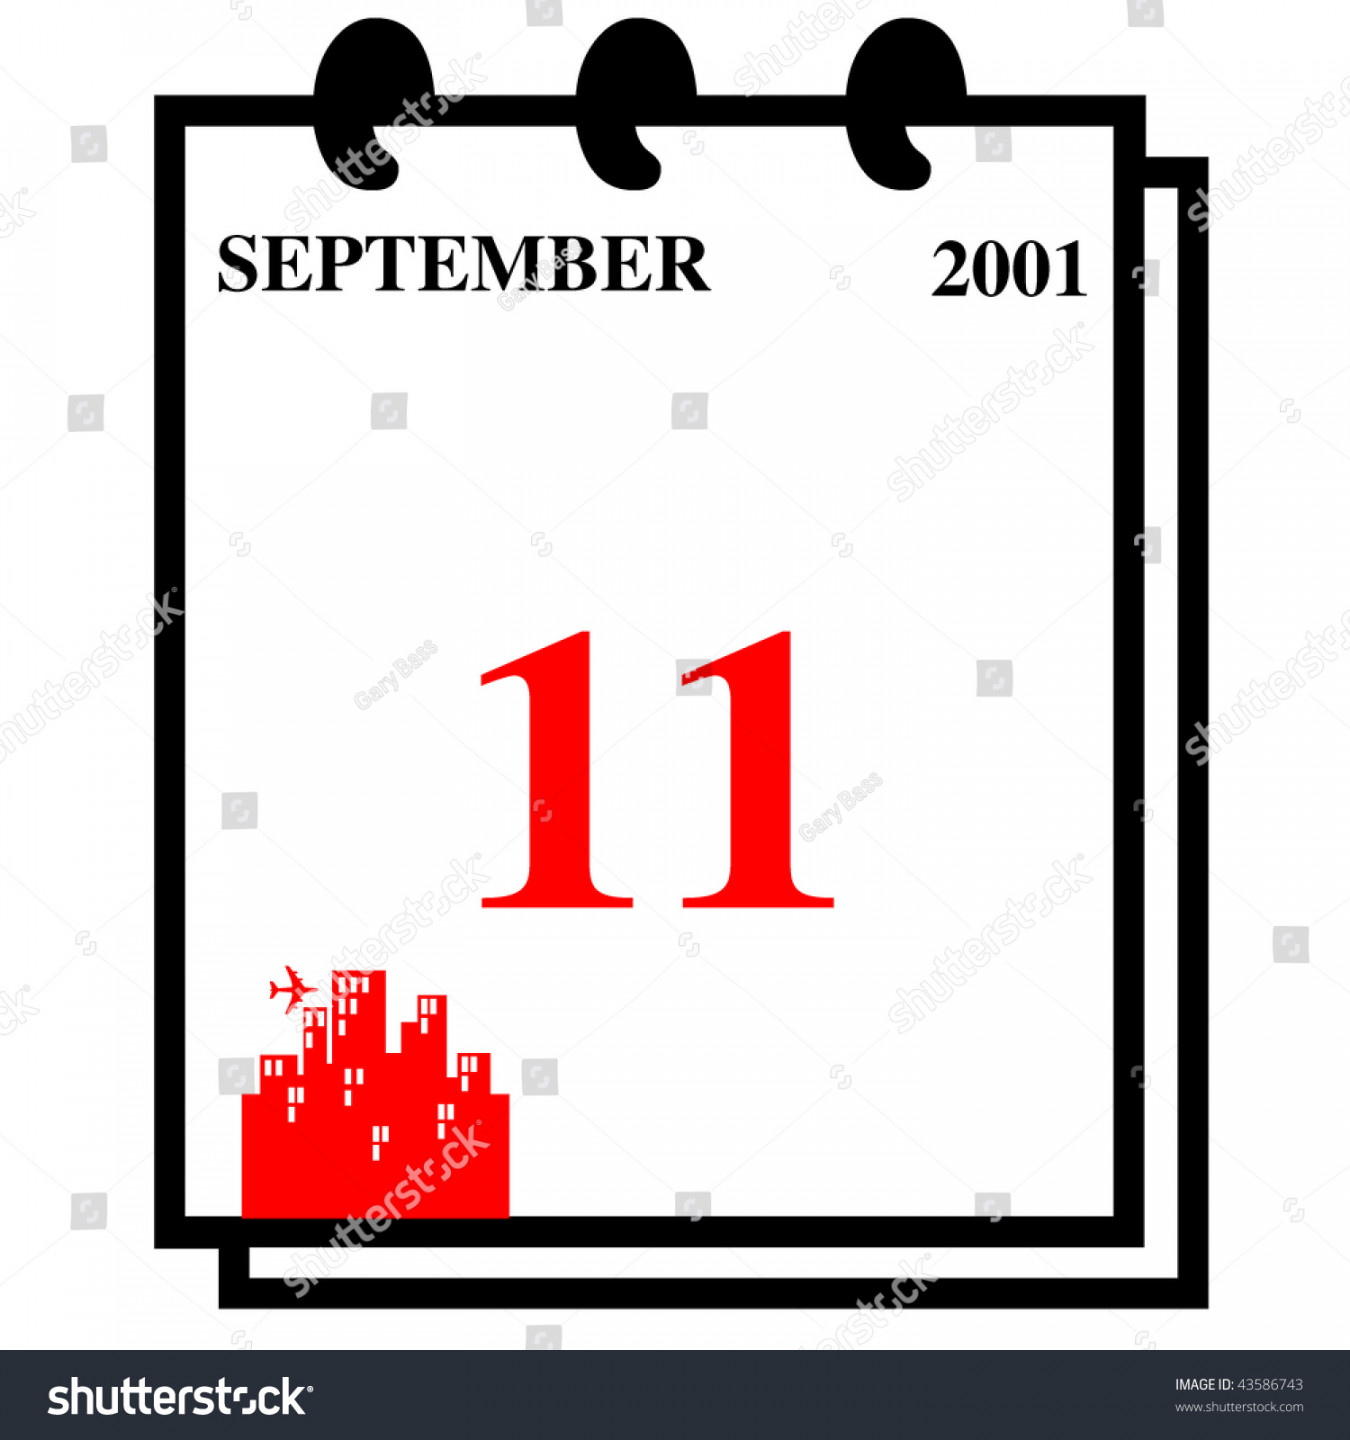 Calendar Stock Illustration   Shutterstock